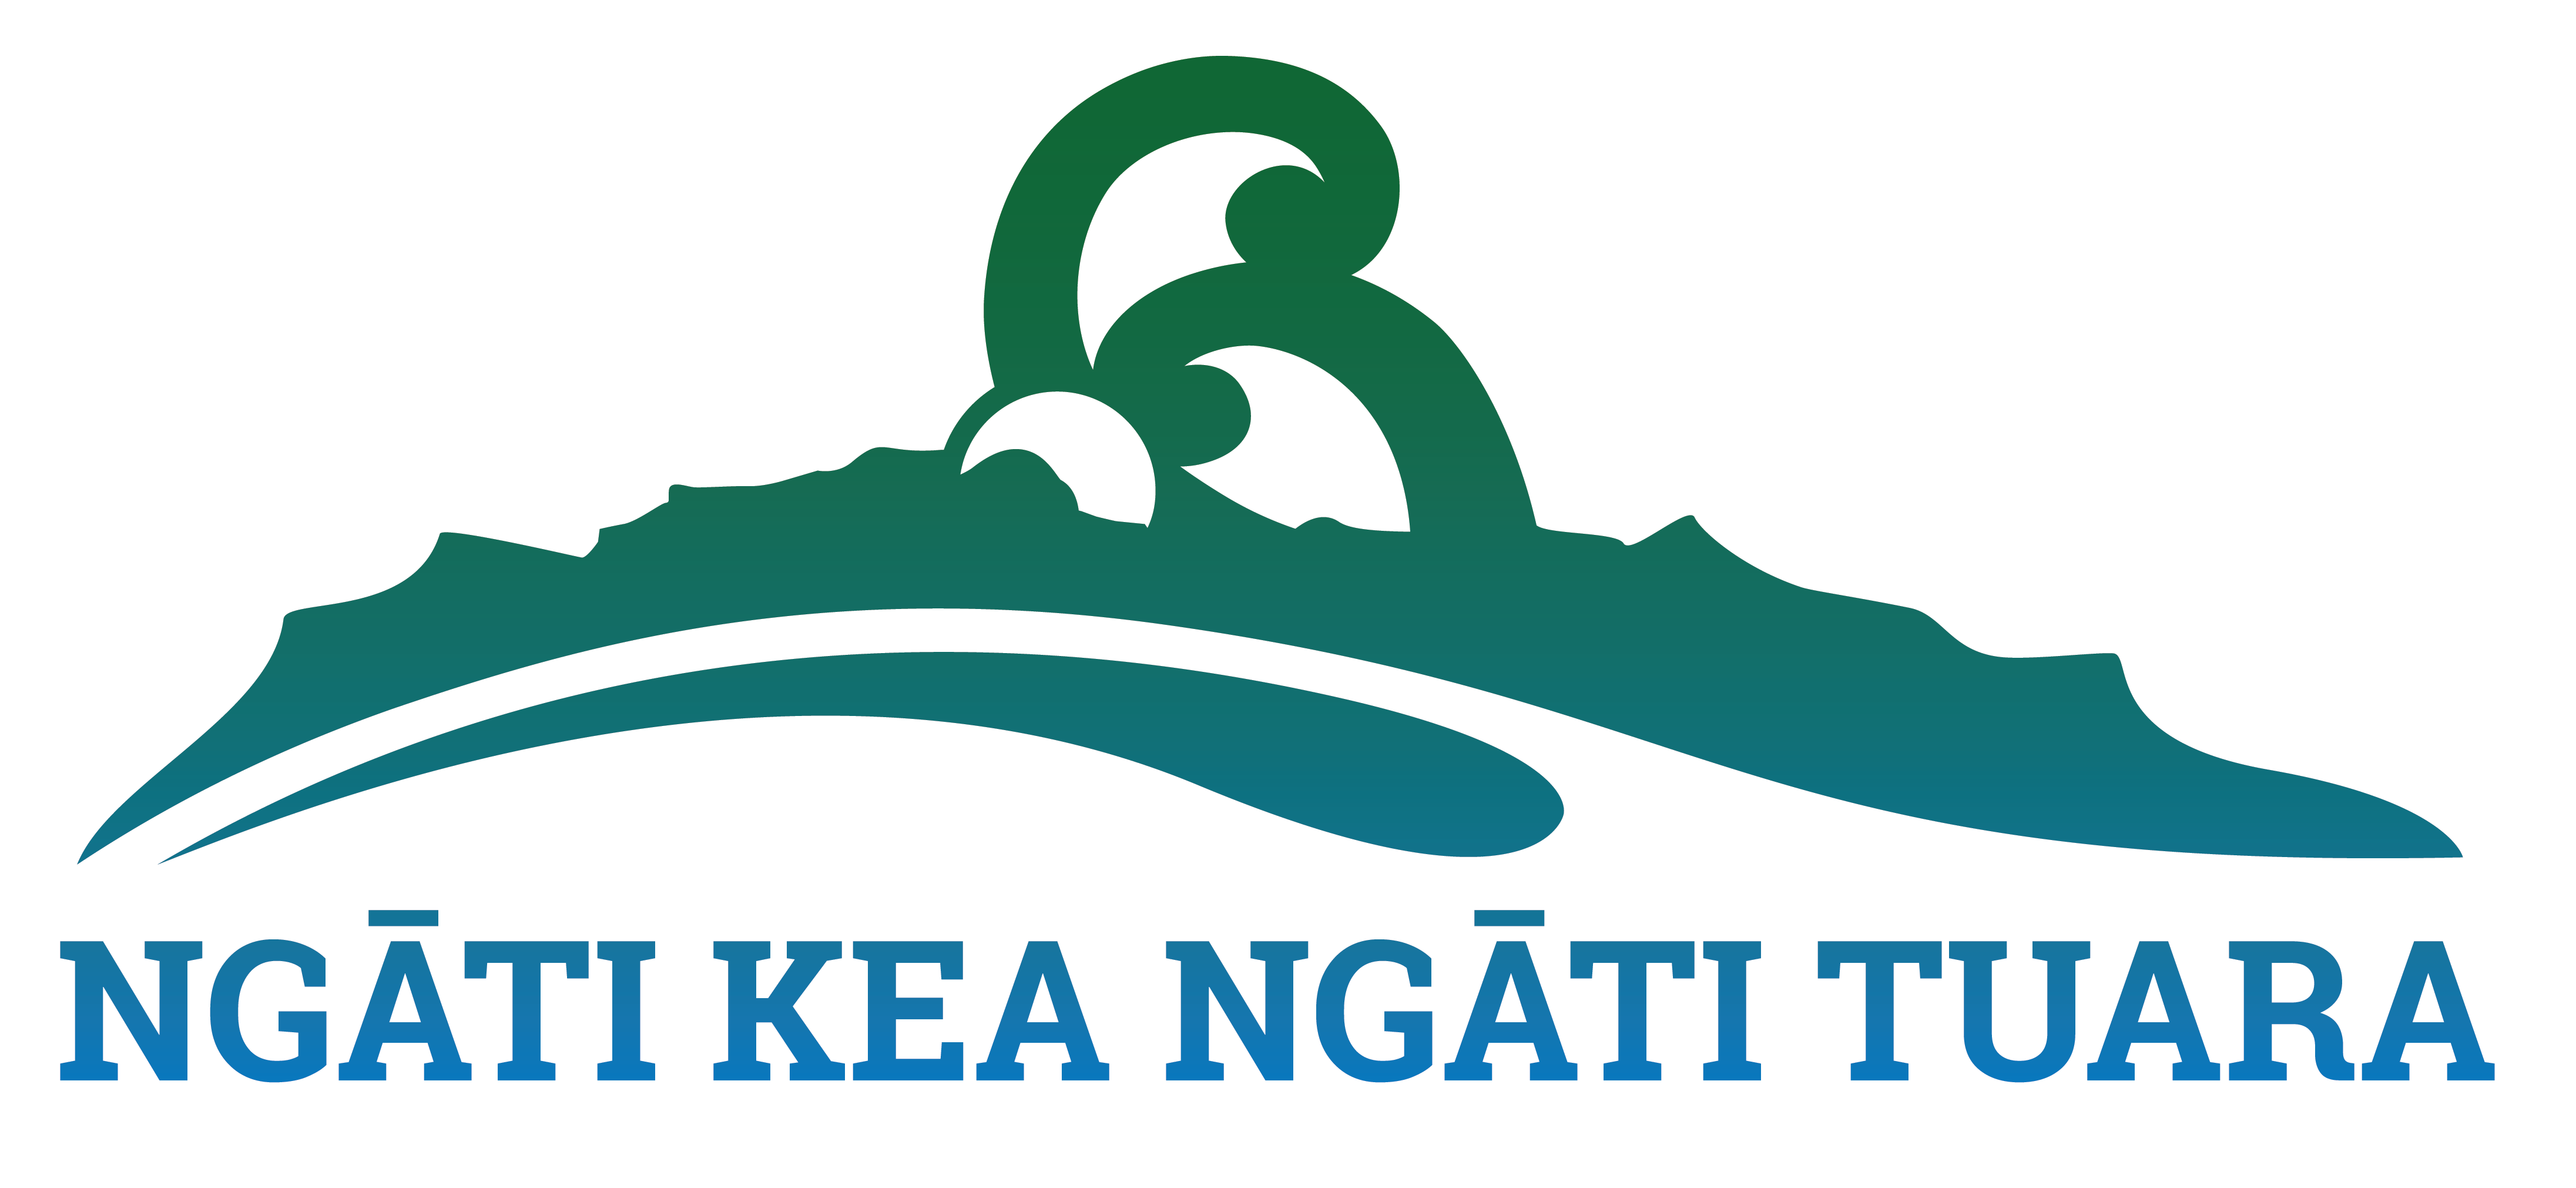 Ngāti Kearoa Ngāti Tuara